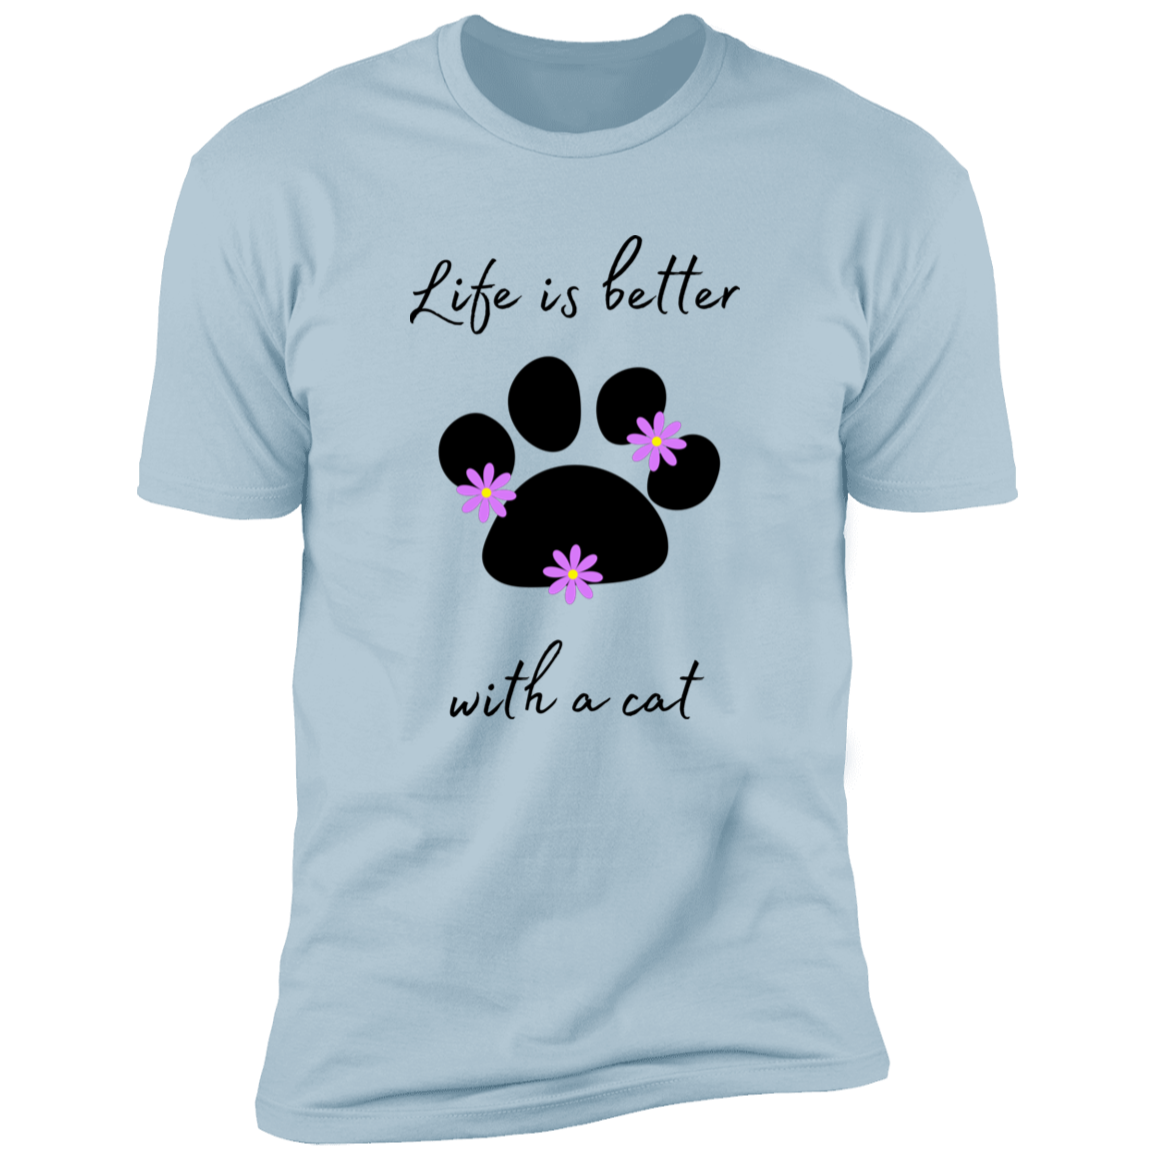 Life is Better with a Cat (Flower) cat t-shirt, cat shirt for humans, cat themed t-shirt, in light blue